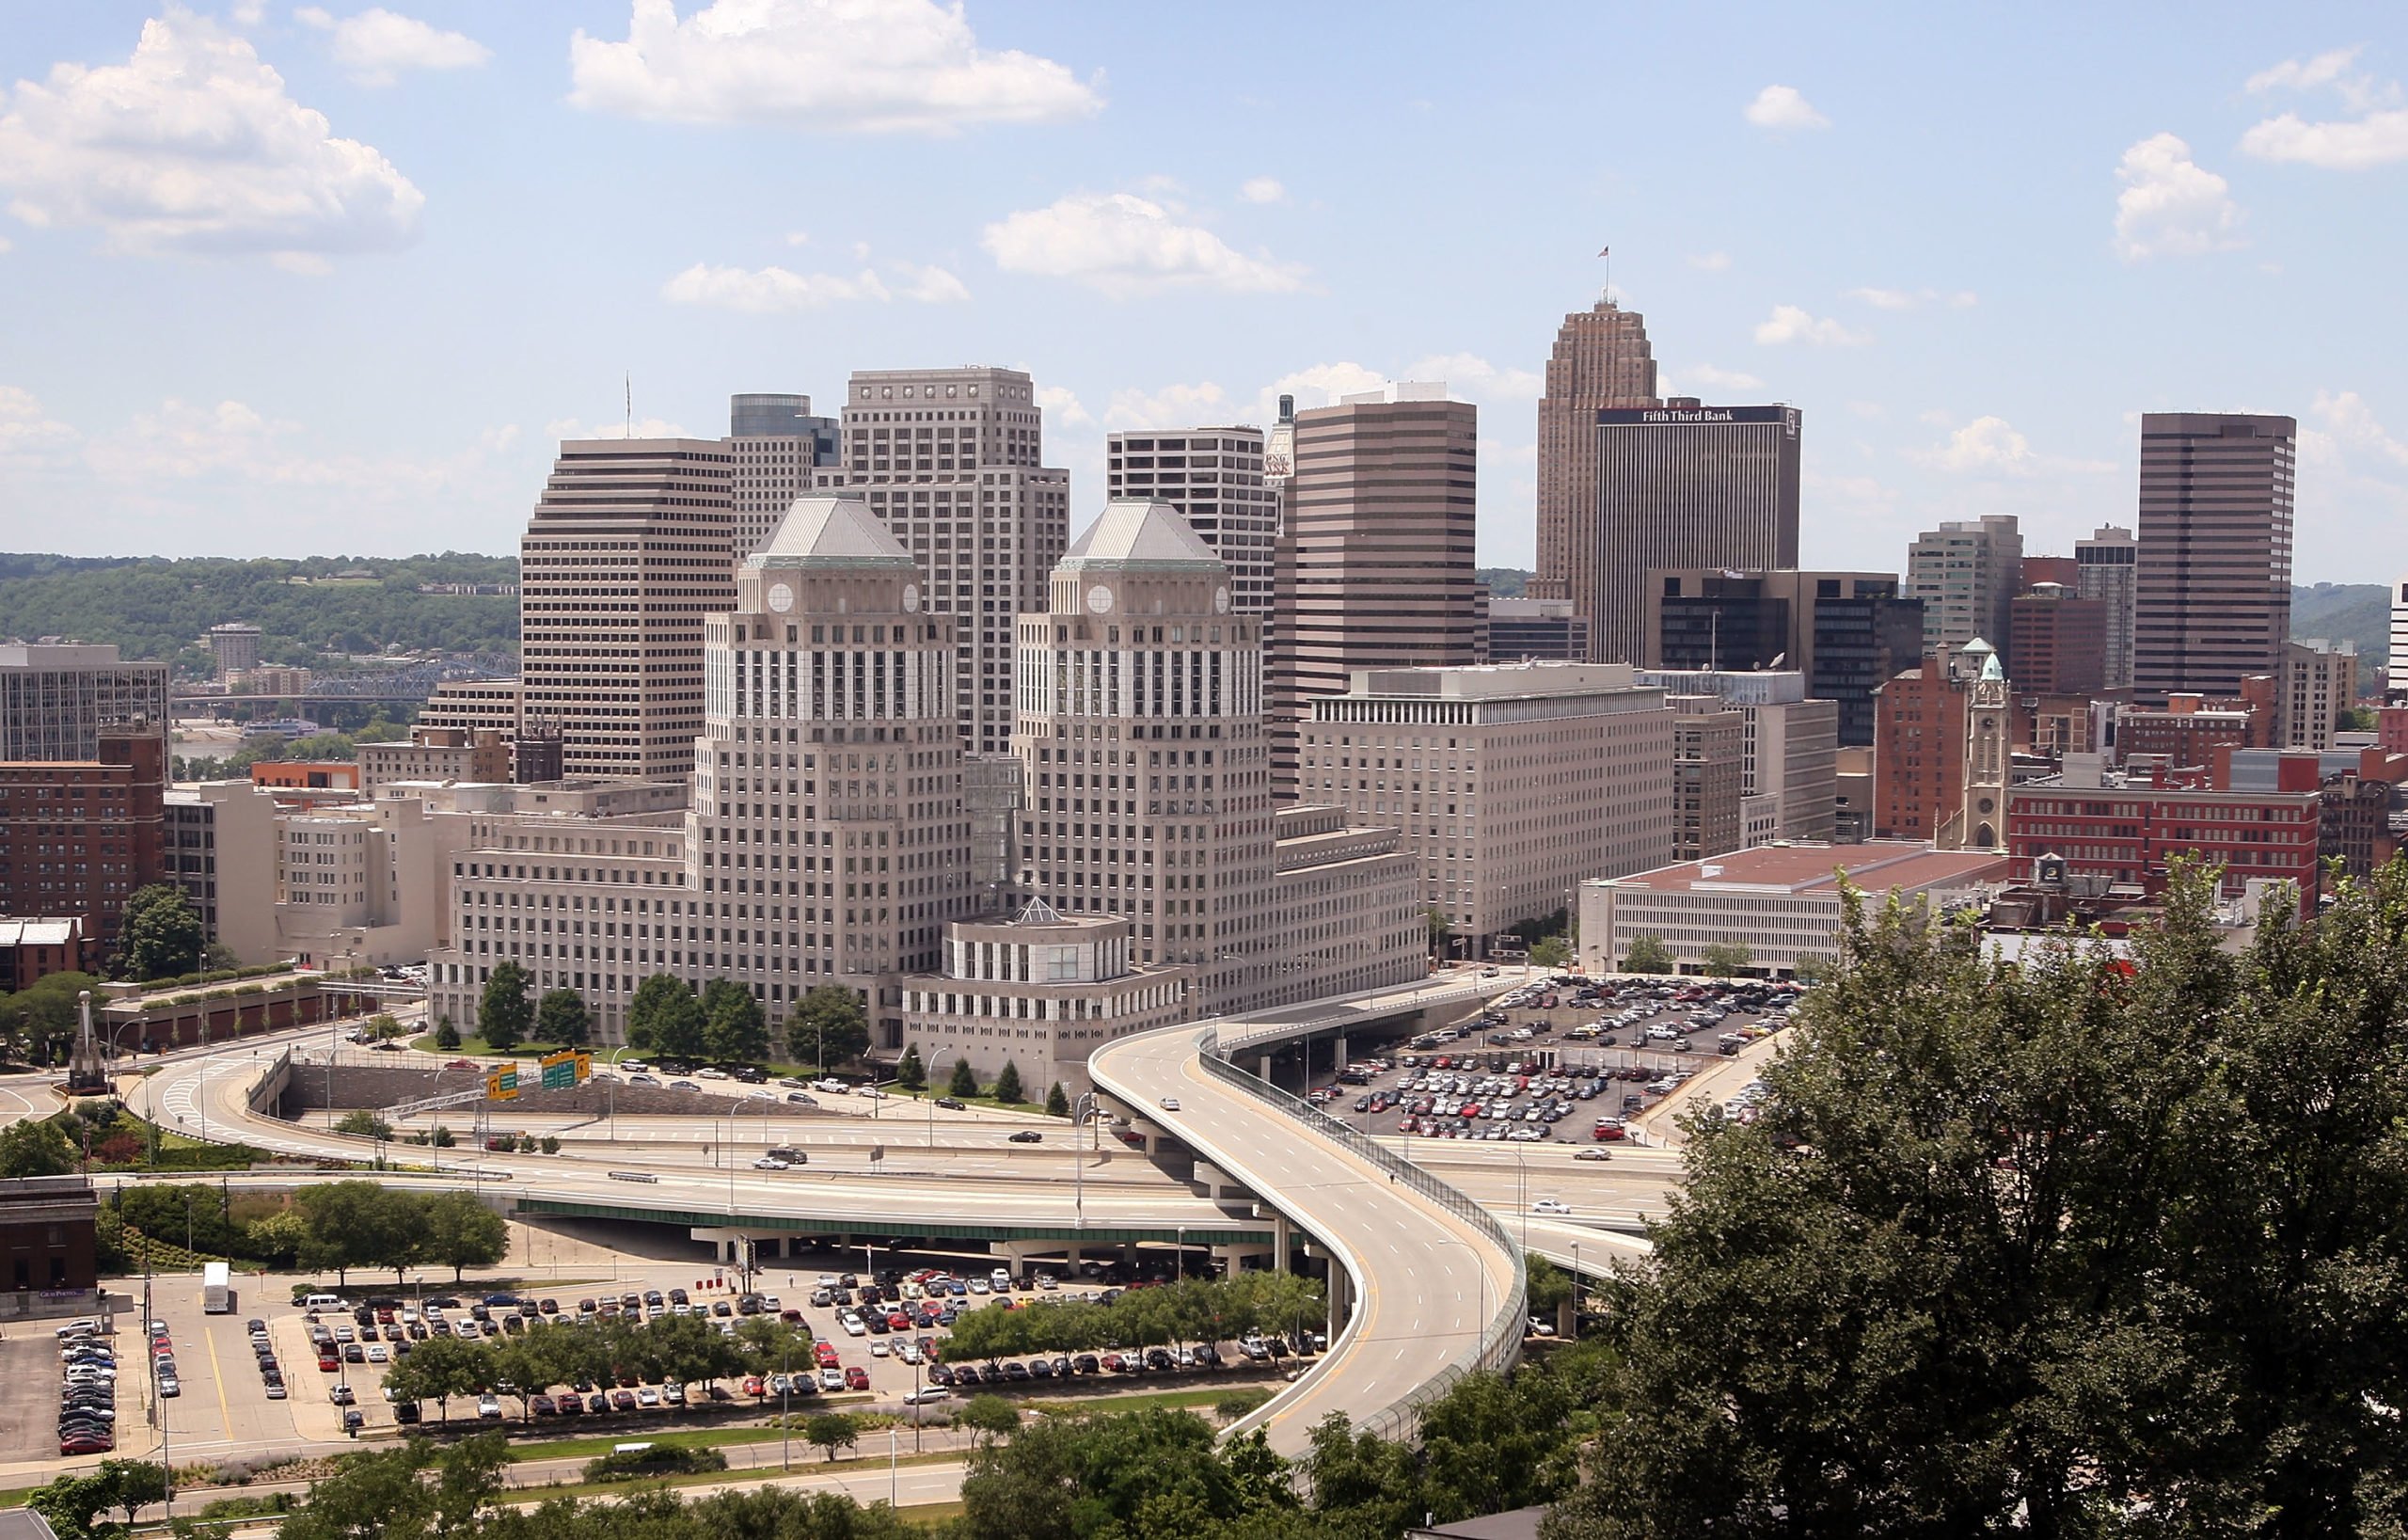 The skyline of Downtown Cincinnati, Ohio. (Scott Olson/Getty Images)